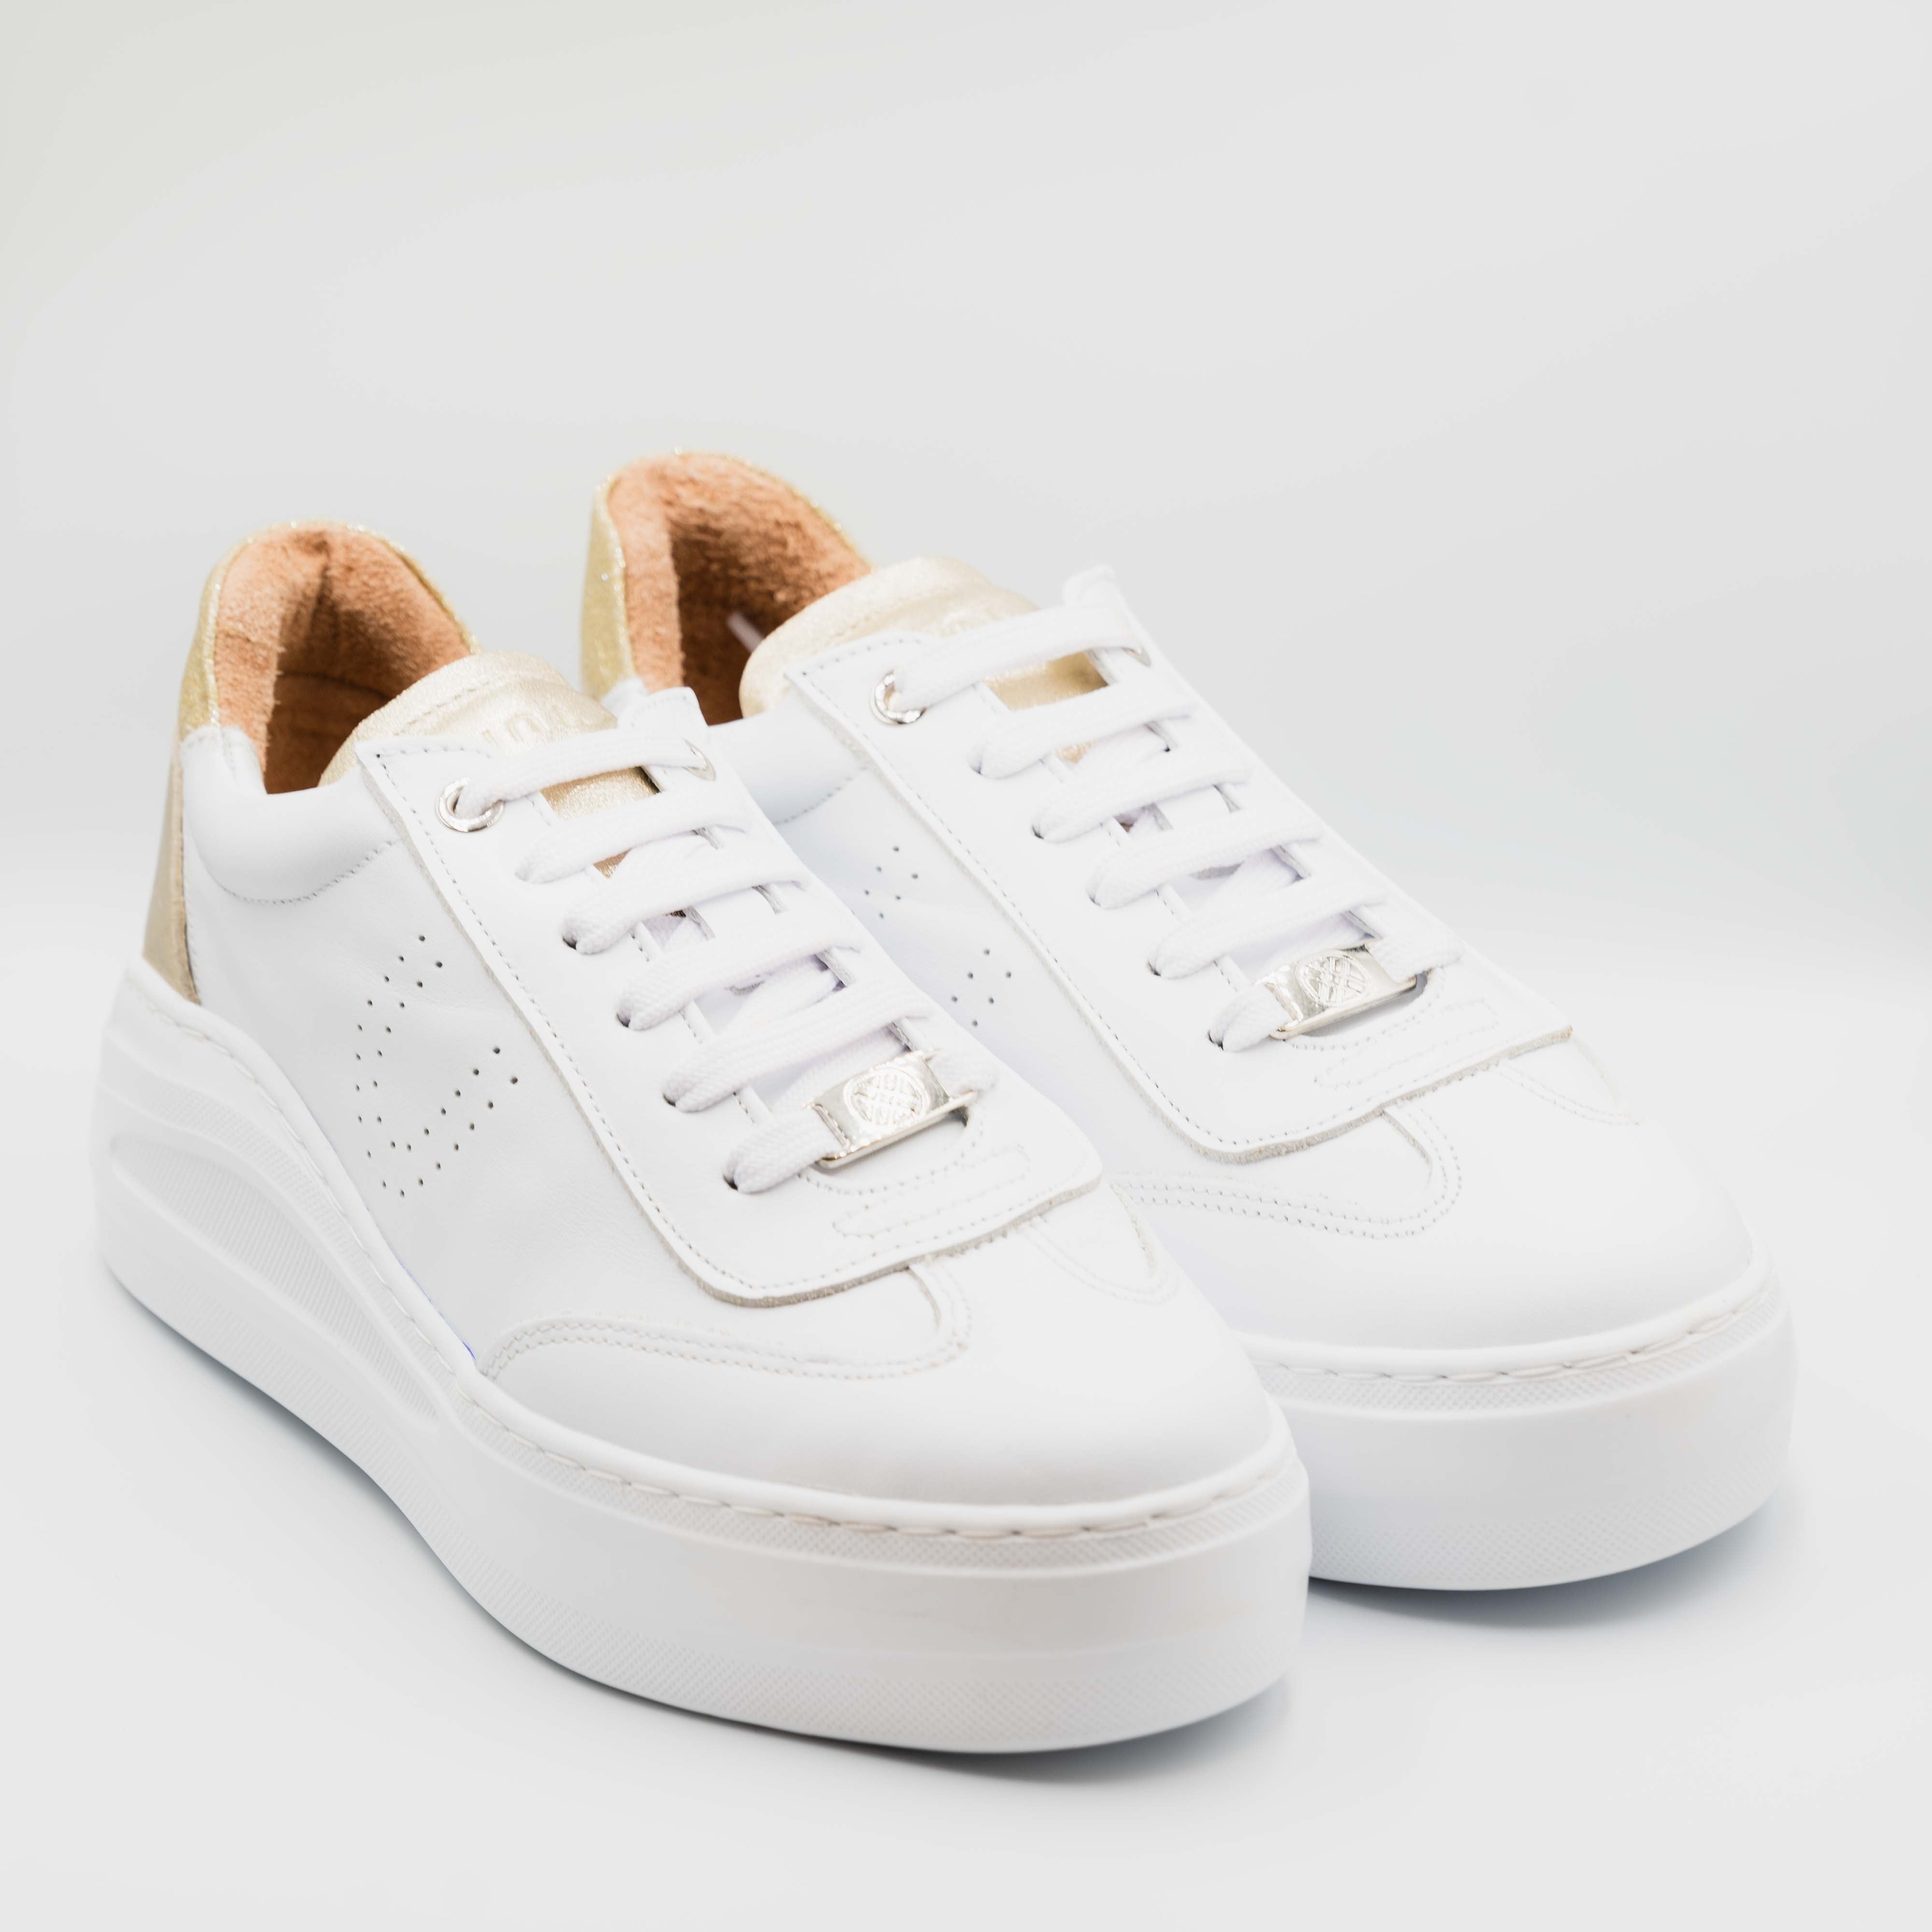 Unisa - Sneakers in pelle bianca e platino